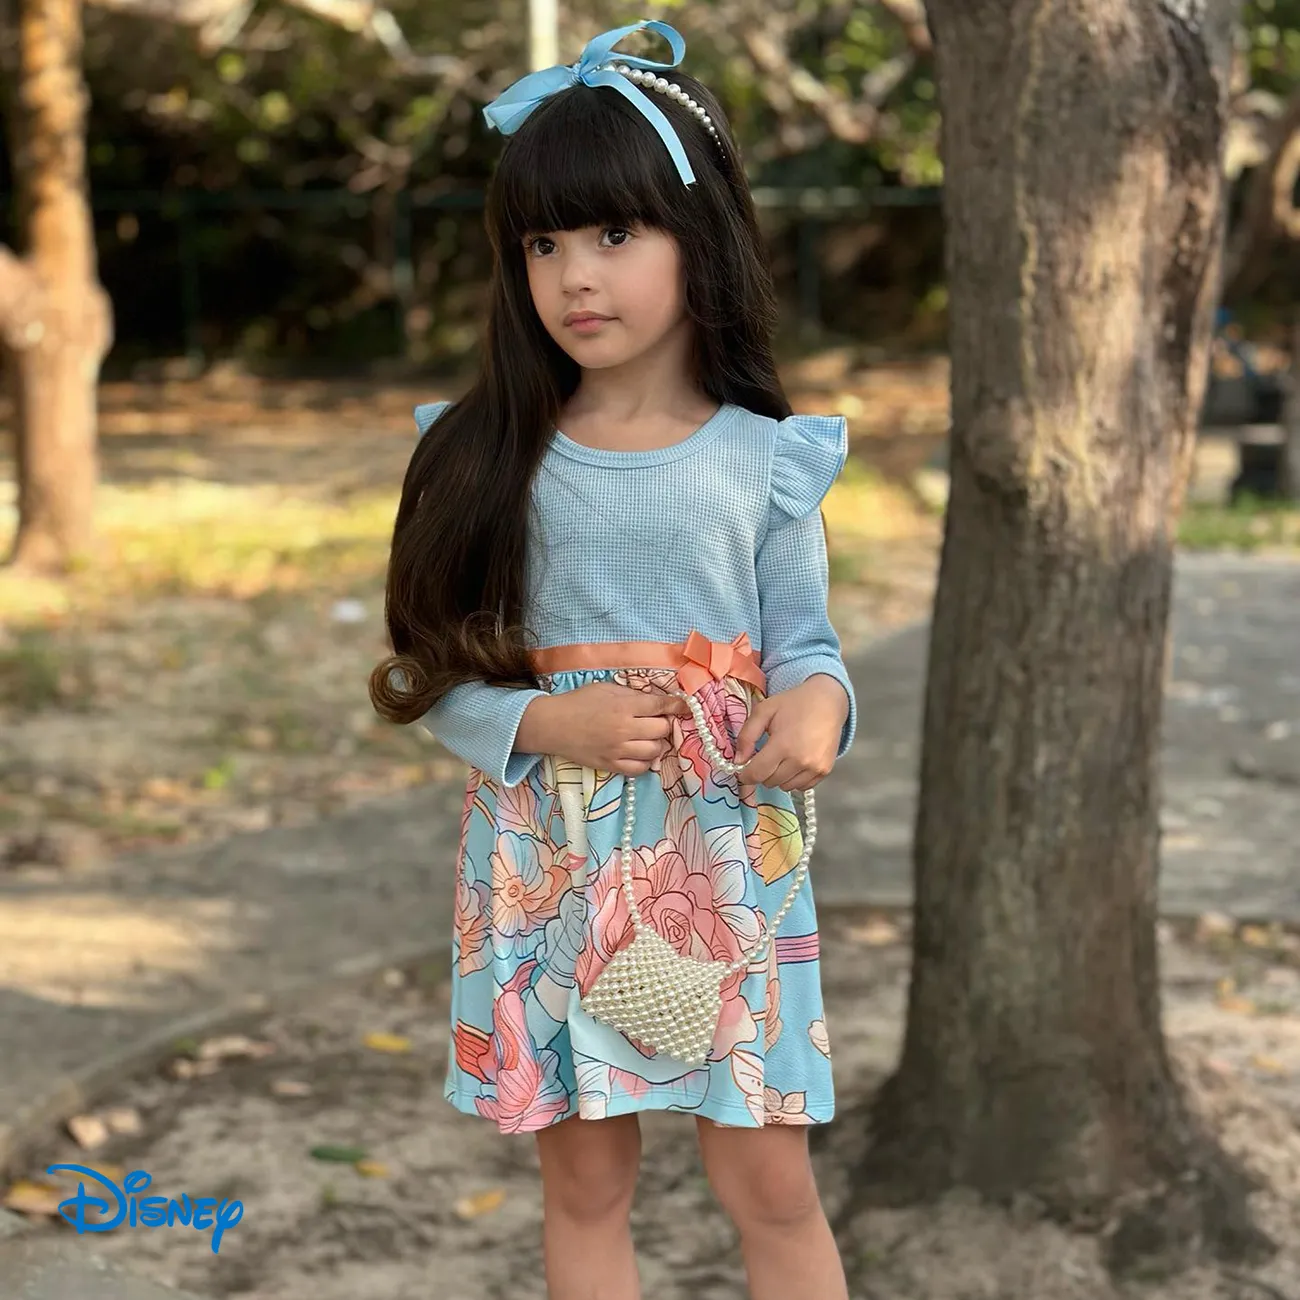 Disney Princess Enfant en bas âge Fille Tresse Doux Robes Bleu big image 1